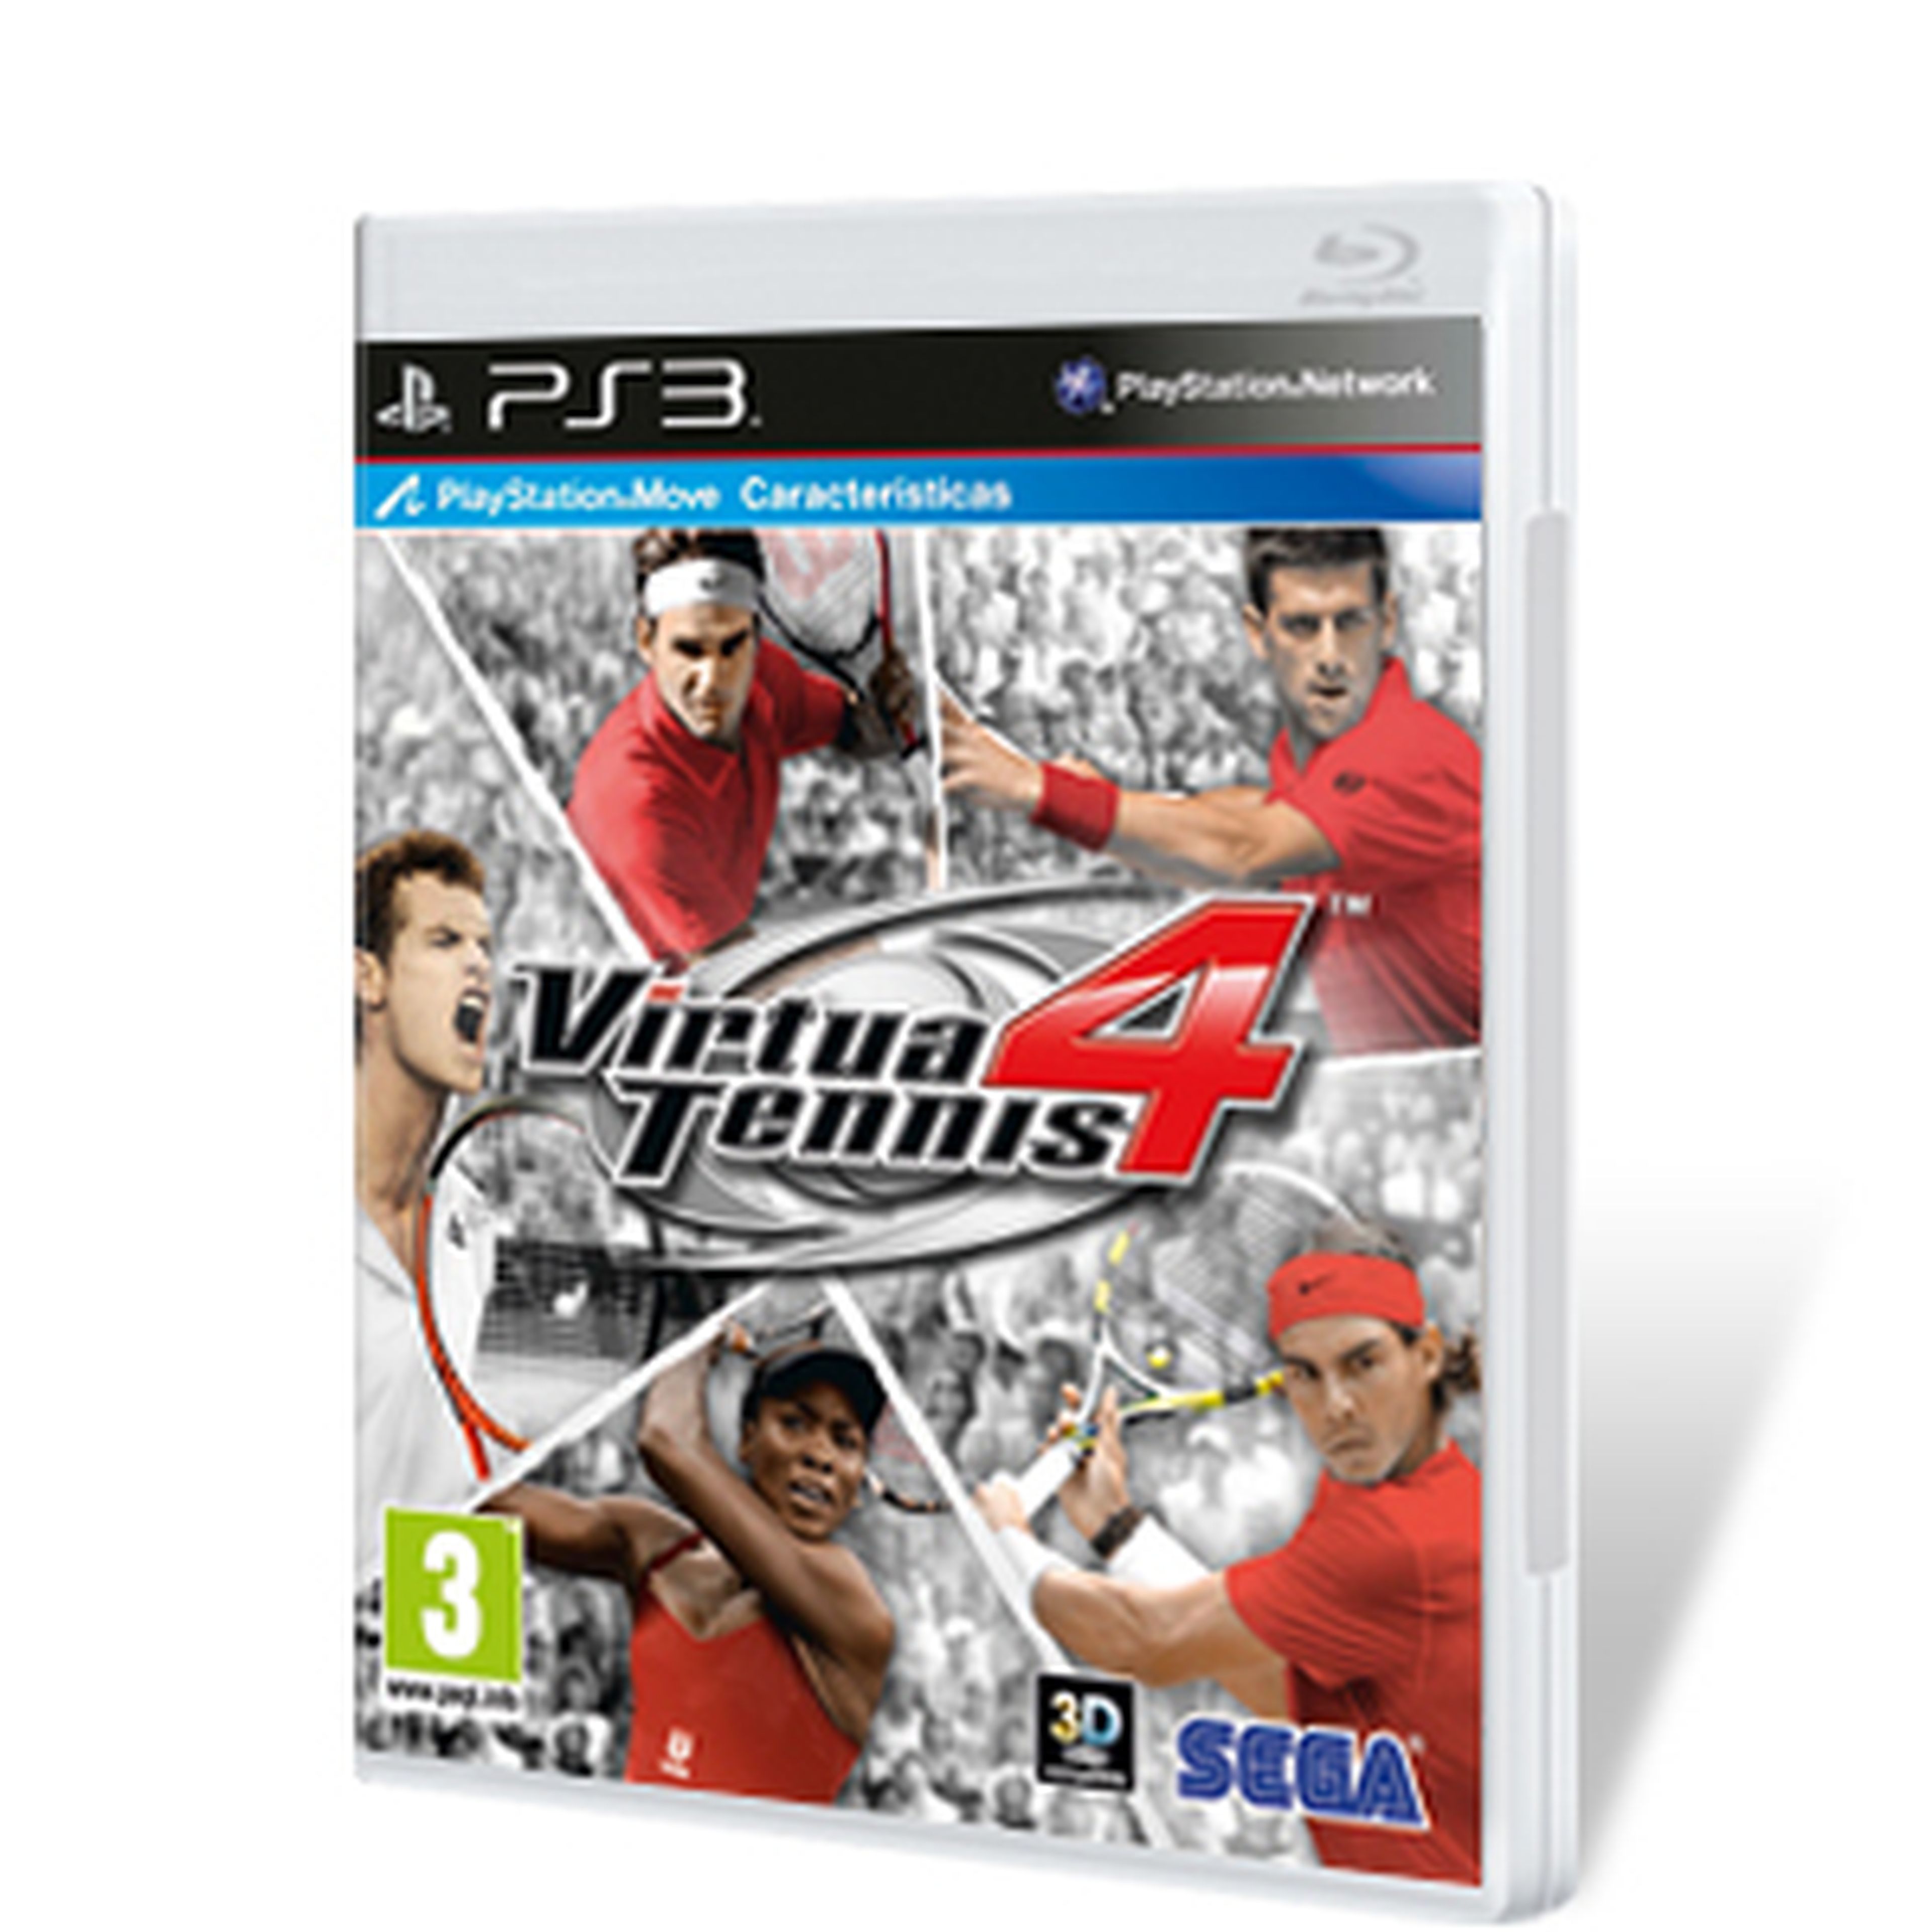 Virtua Tennis 4 para PS3